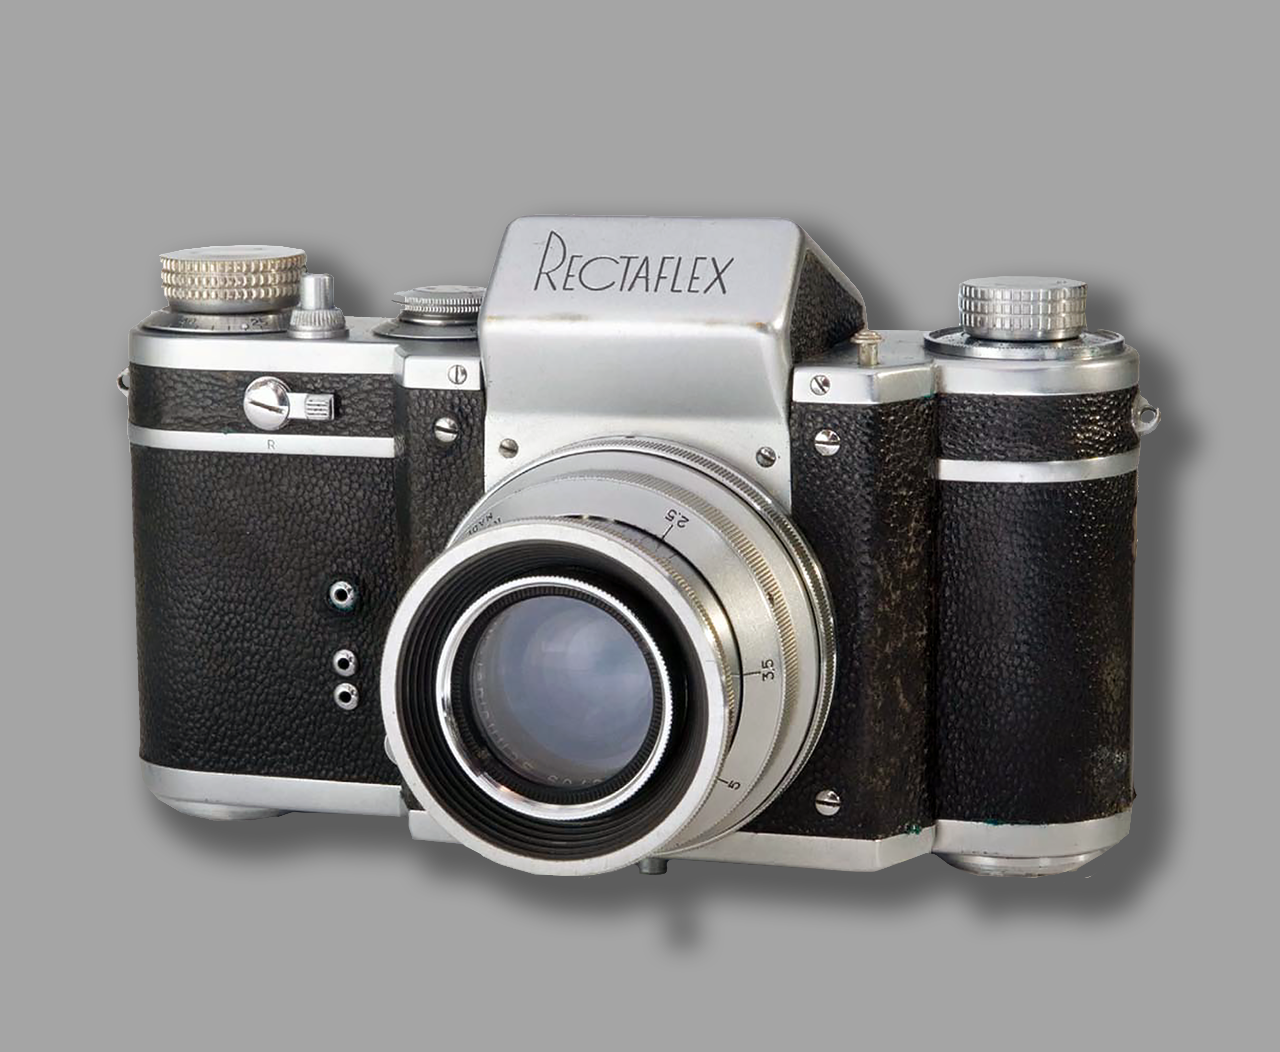 1280x1052px-Rectaflex-camera-vWA24